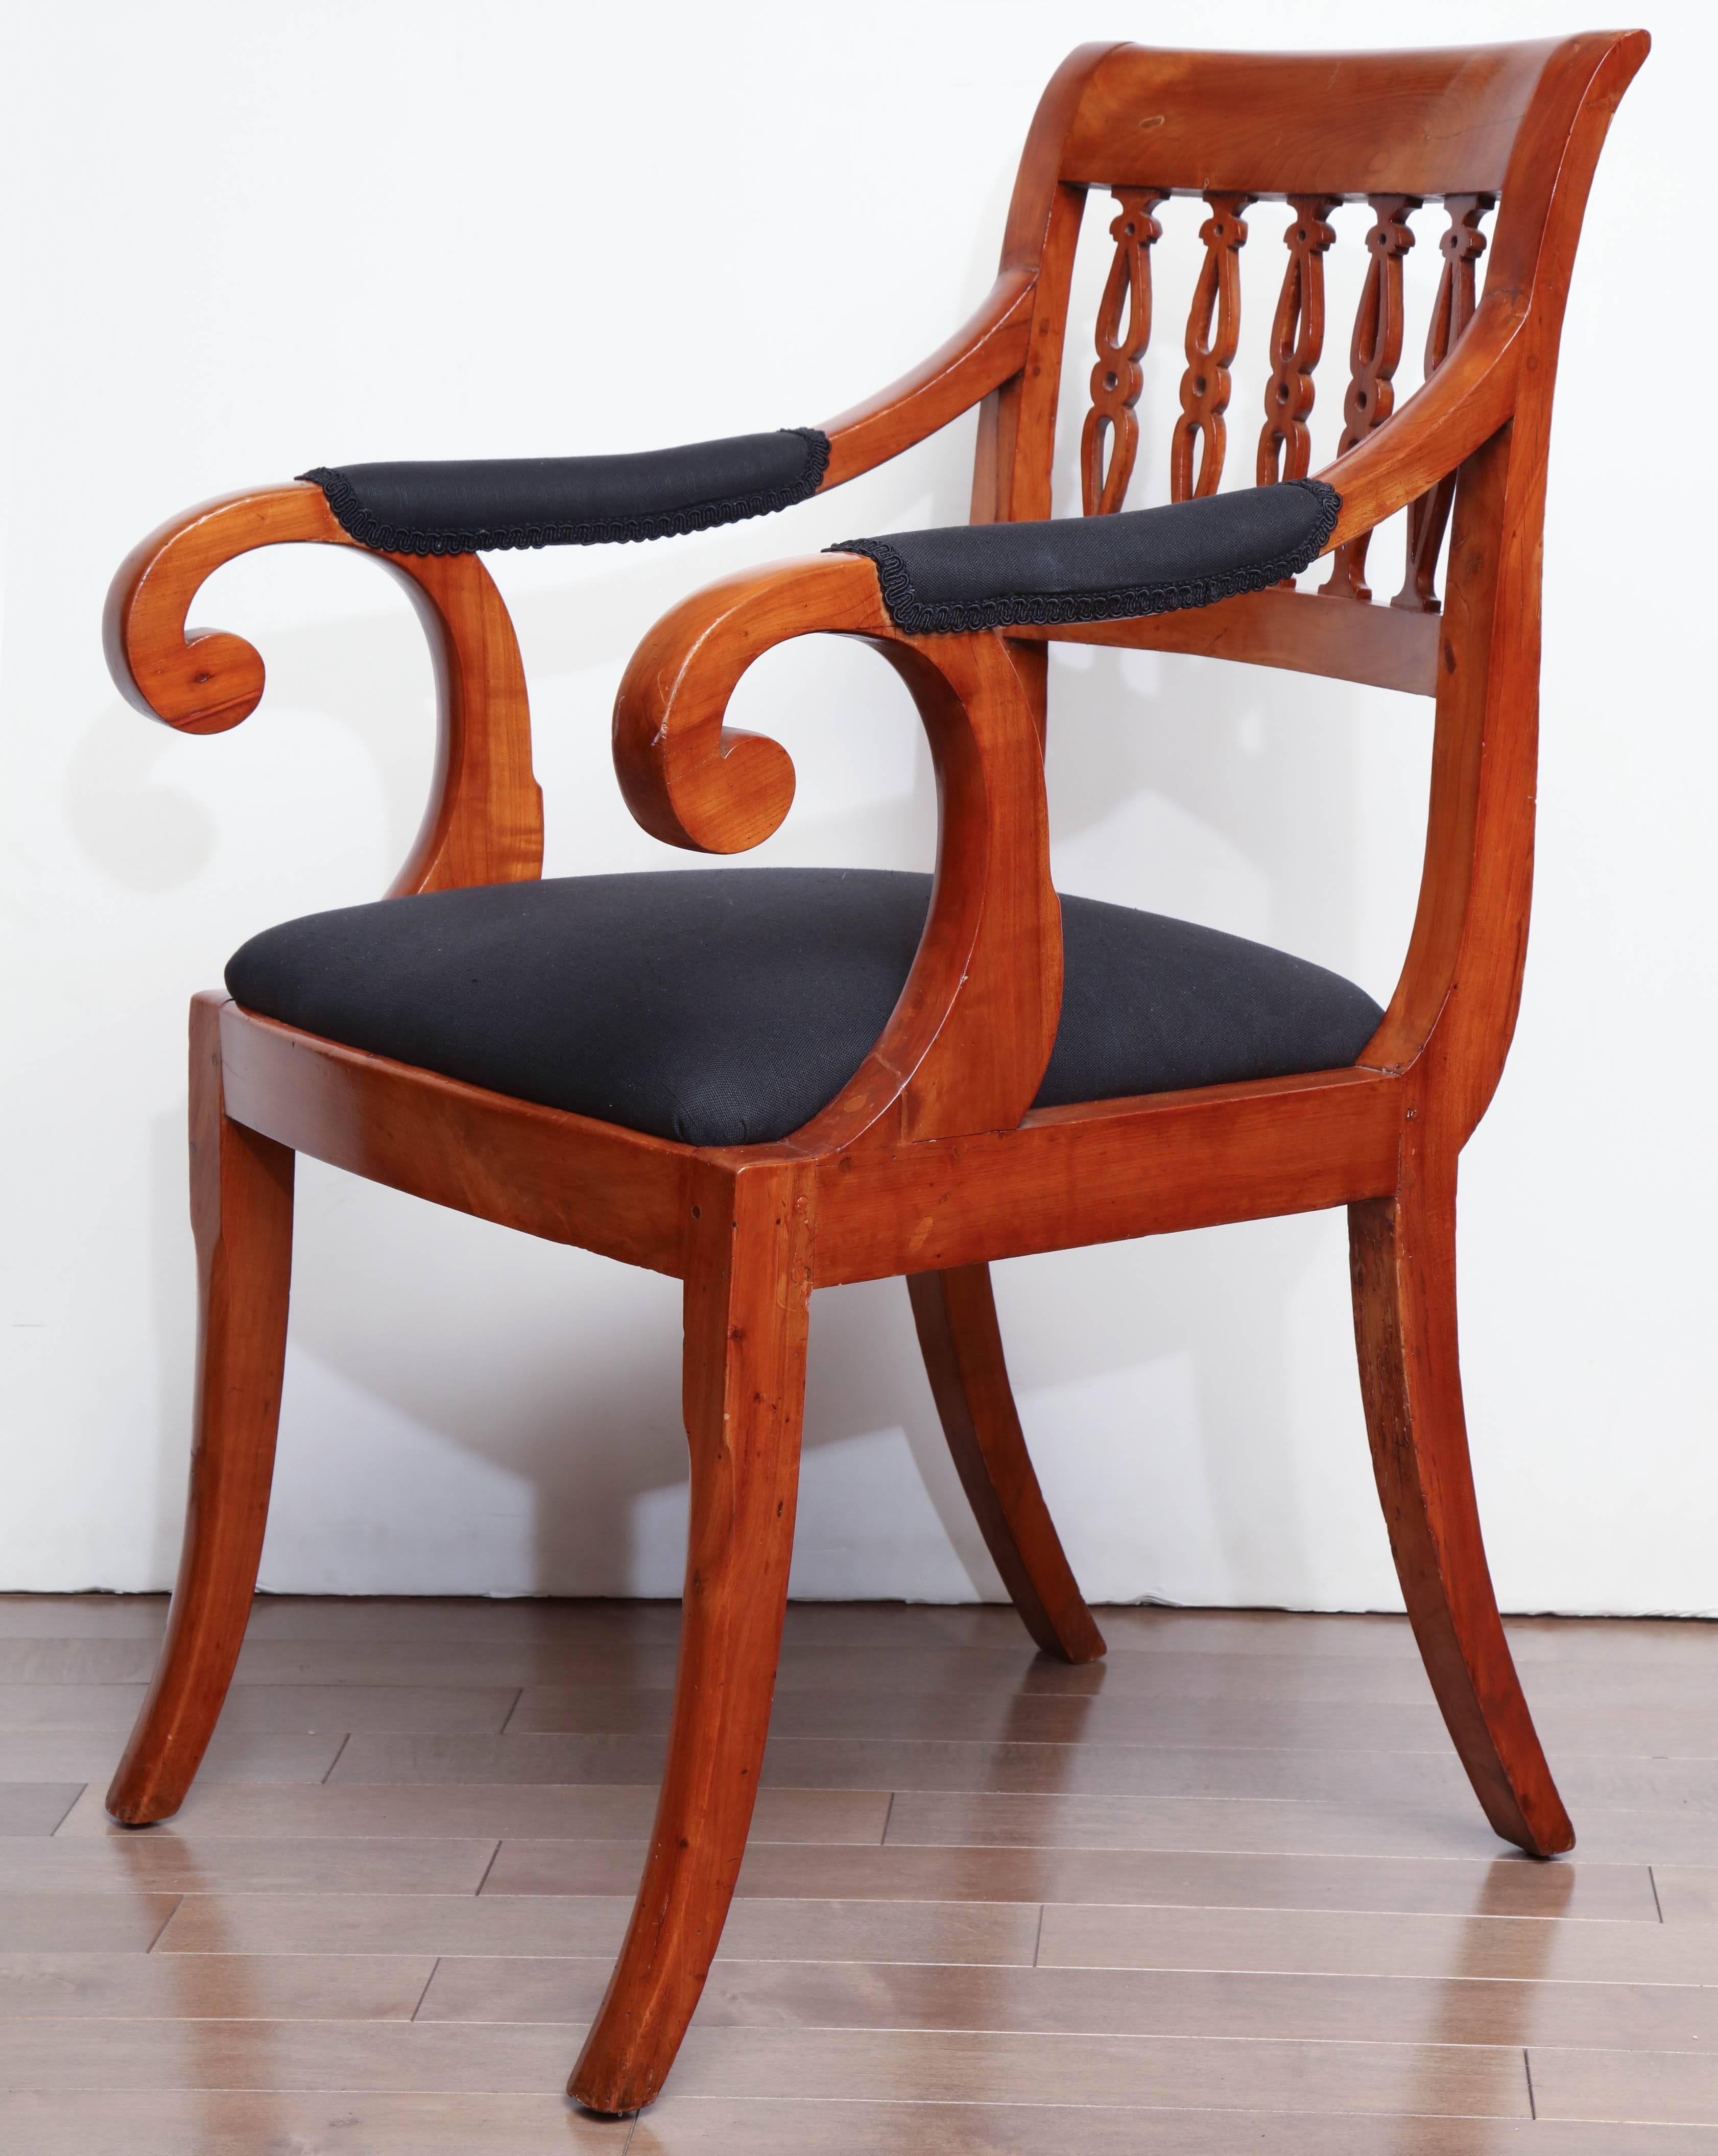 19th century Northern European fruitwood armchair.